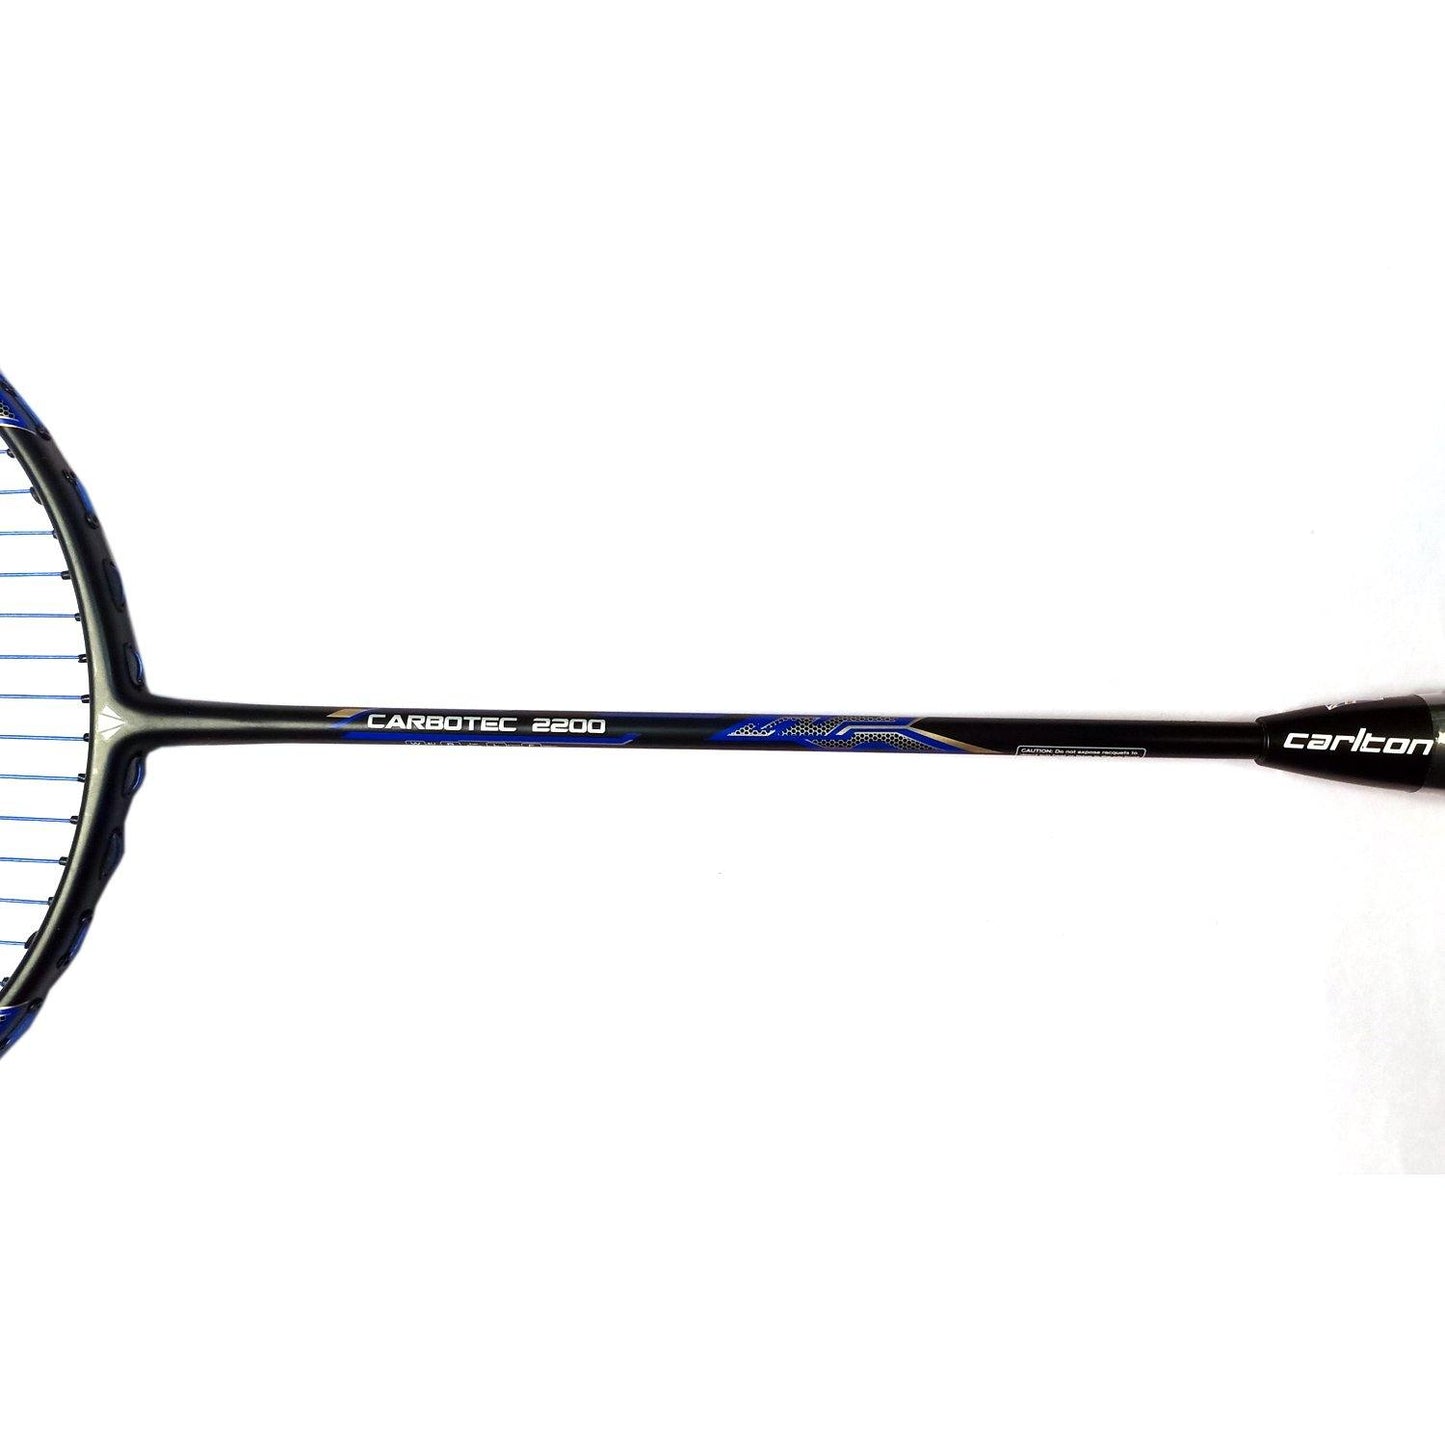 Carlton Carbotec 2200 High Flex Strung Badminton Racquet - Black - Best Price online Prokicksports.com